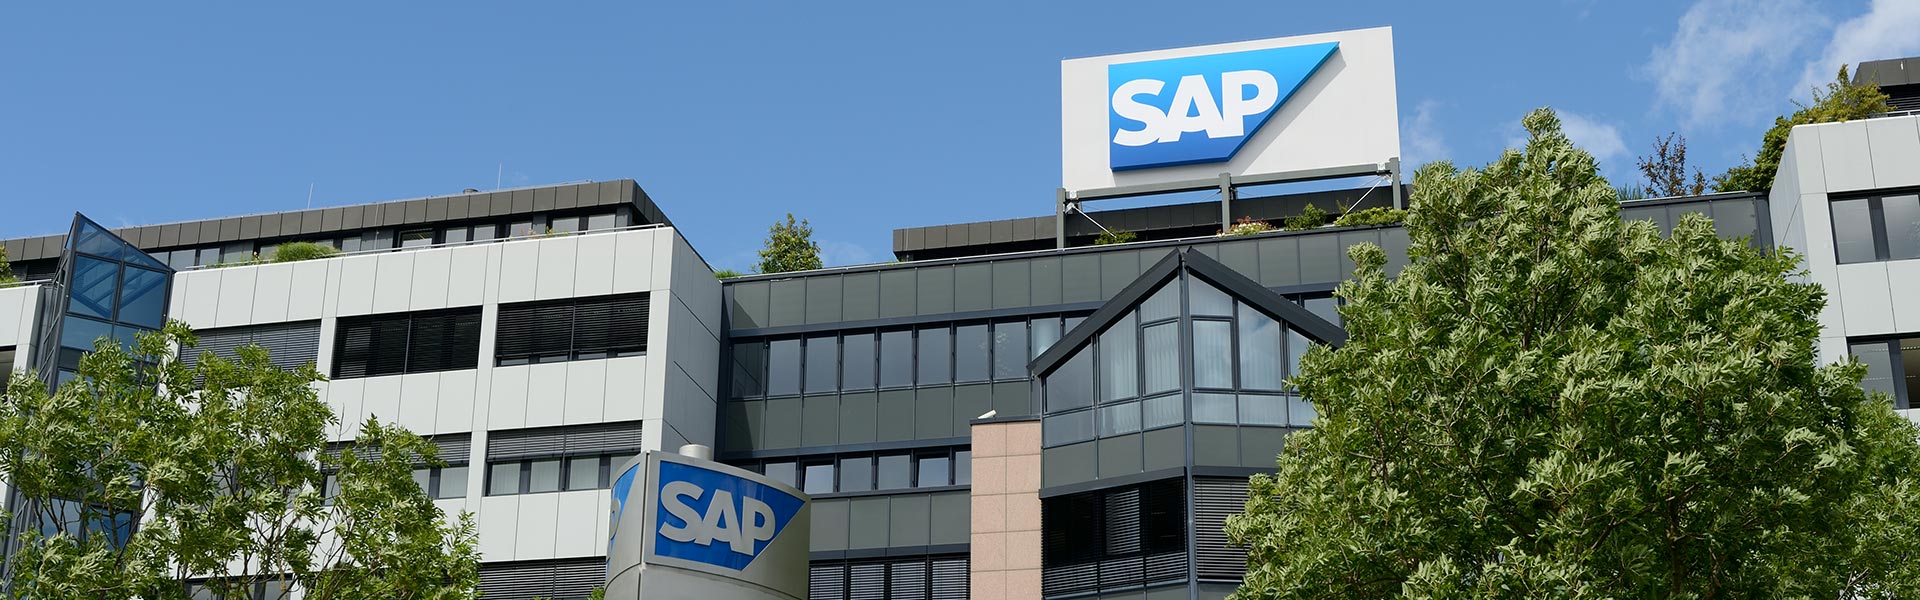 SAP bringt Sansibar Transparenz übers Geschäft